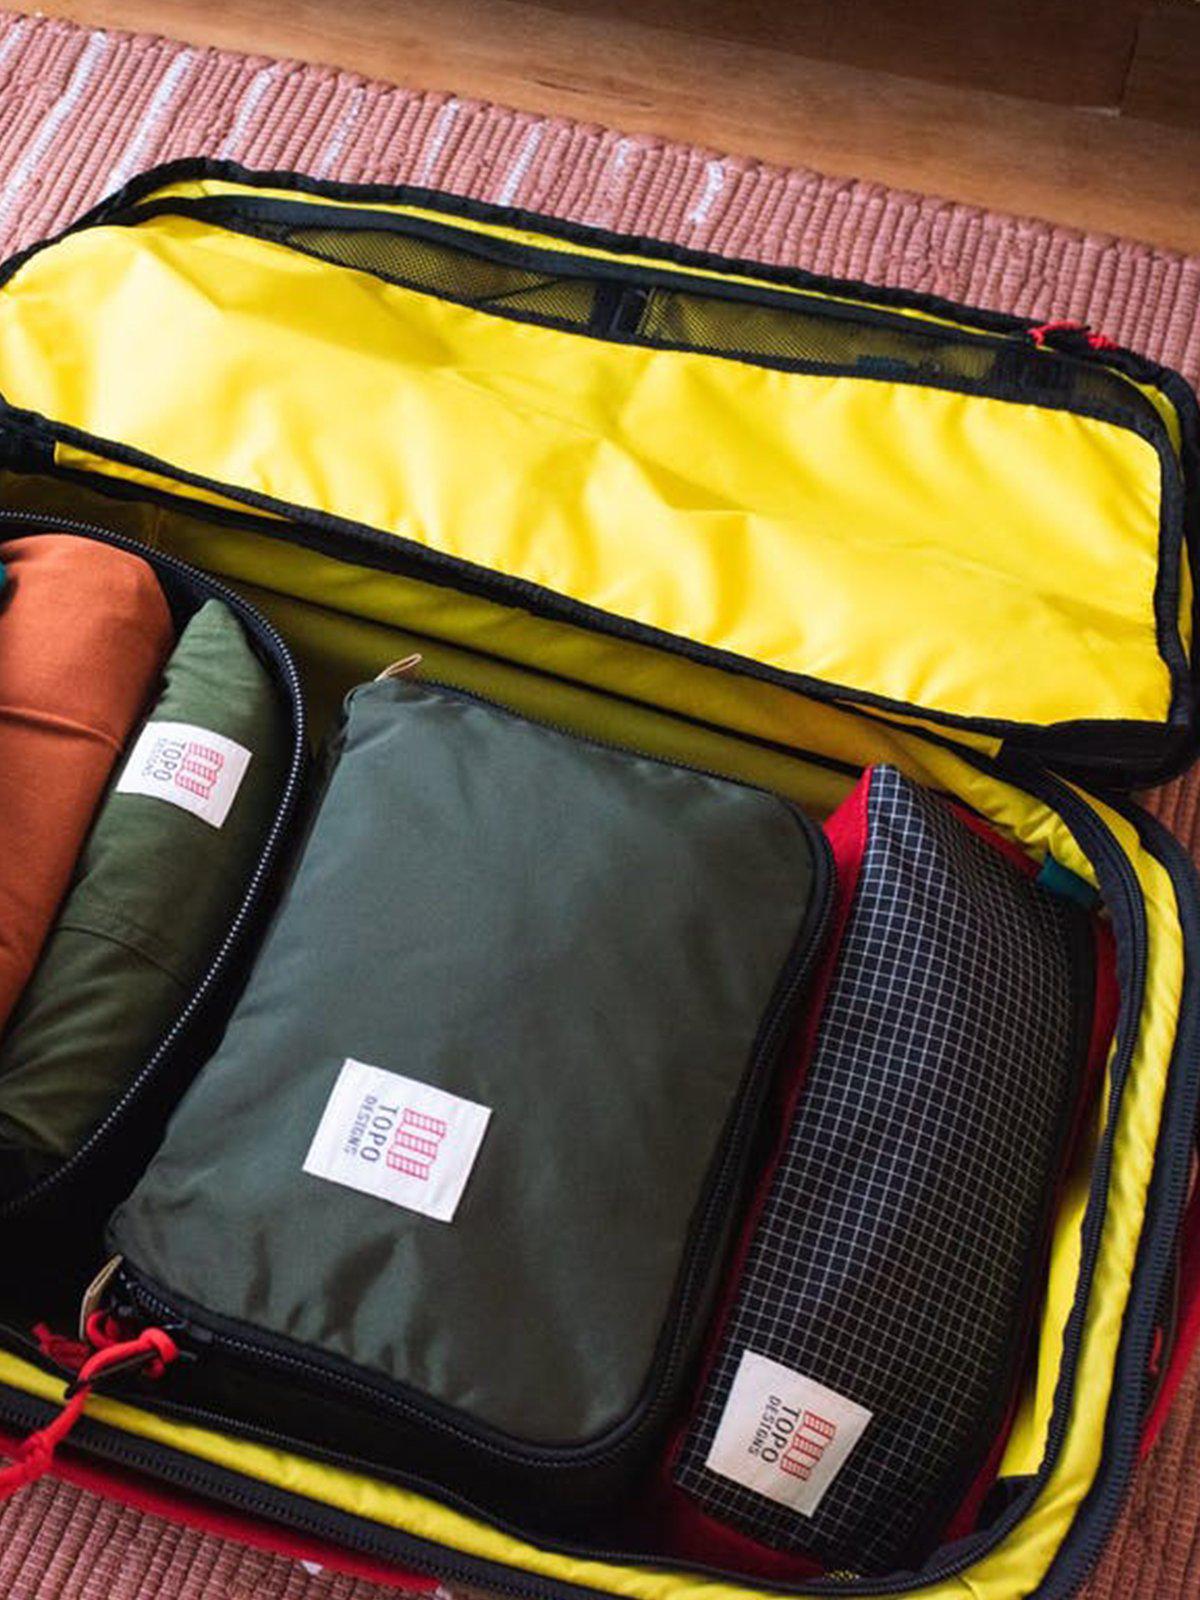 Topo Designs Pack Bag 10L Cube Black